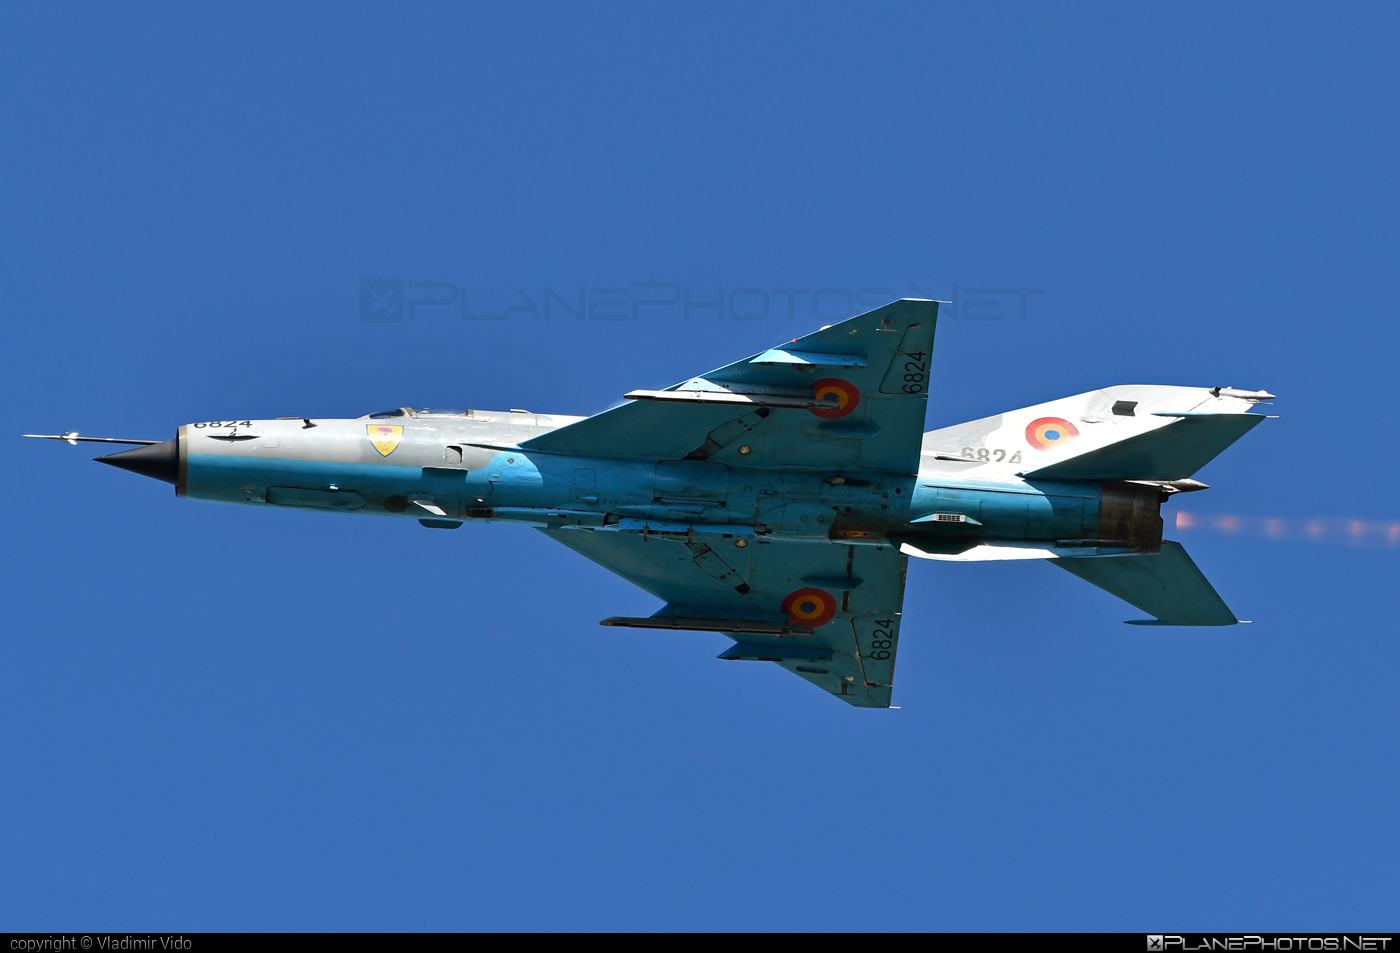 Mikoyan-Gurevich MiG-21MF - 6824 operated by Forţele Aeriene Române (Romanian Air Force) #forteleaerieneromane #mig #mig21 #mig21mf #mikoyangurevich #romanianairforce